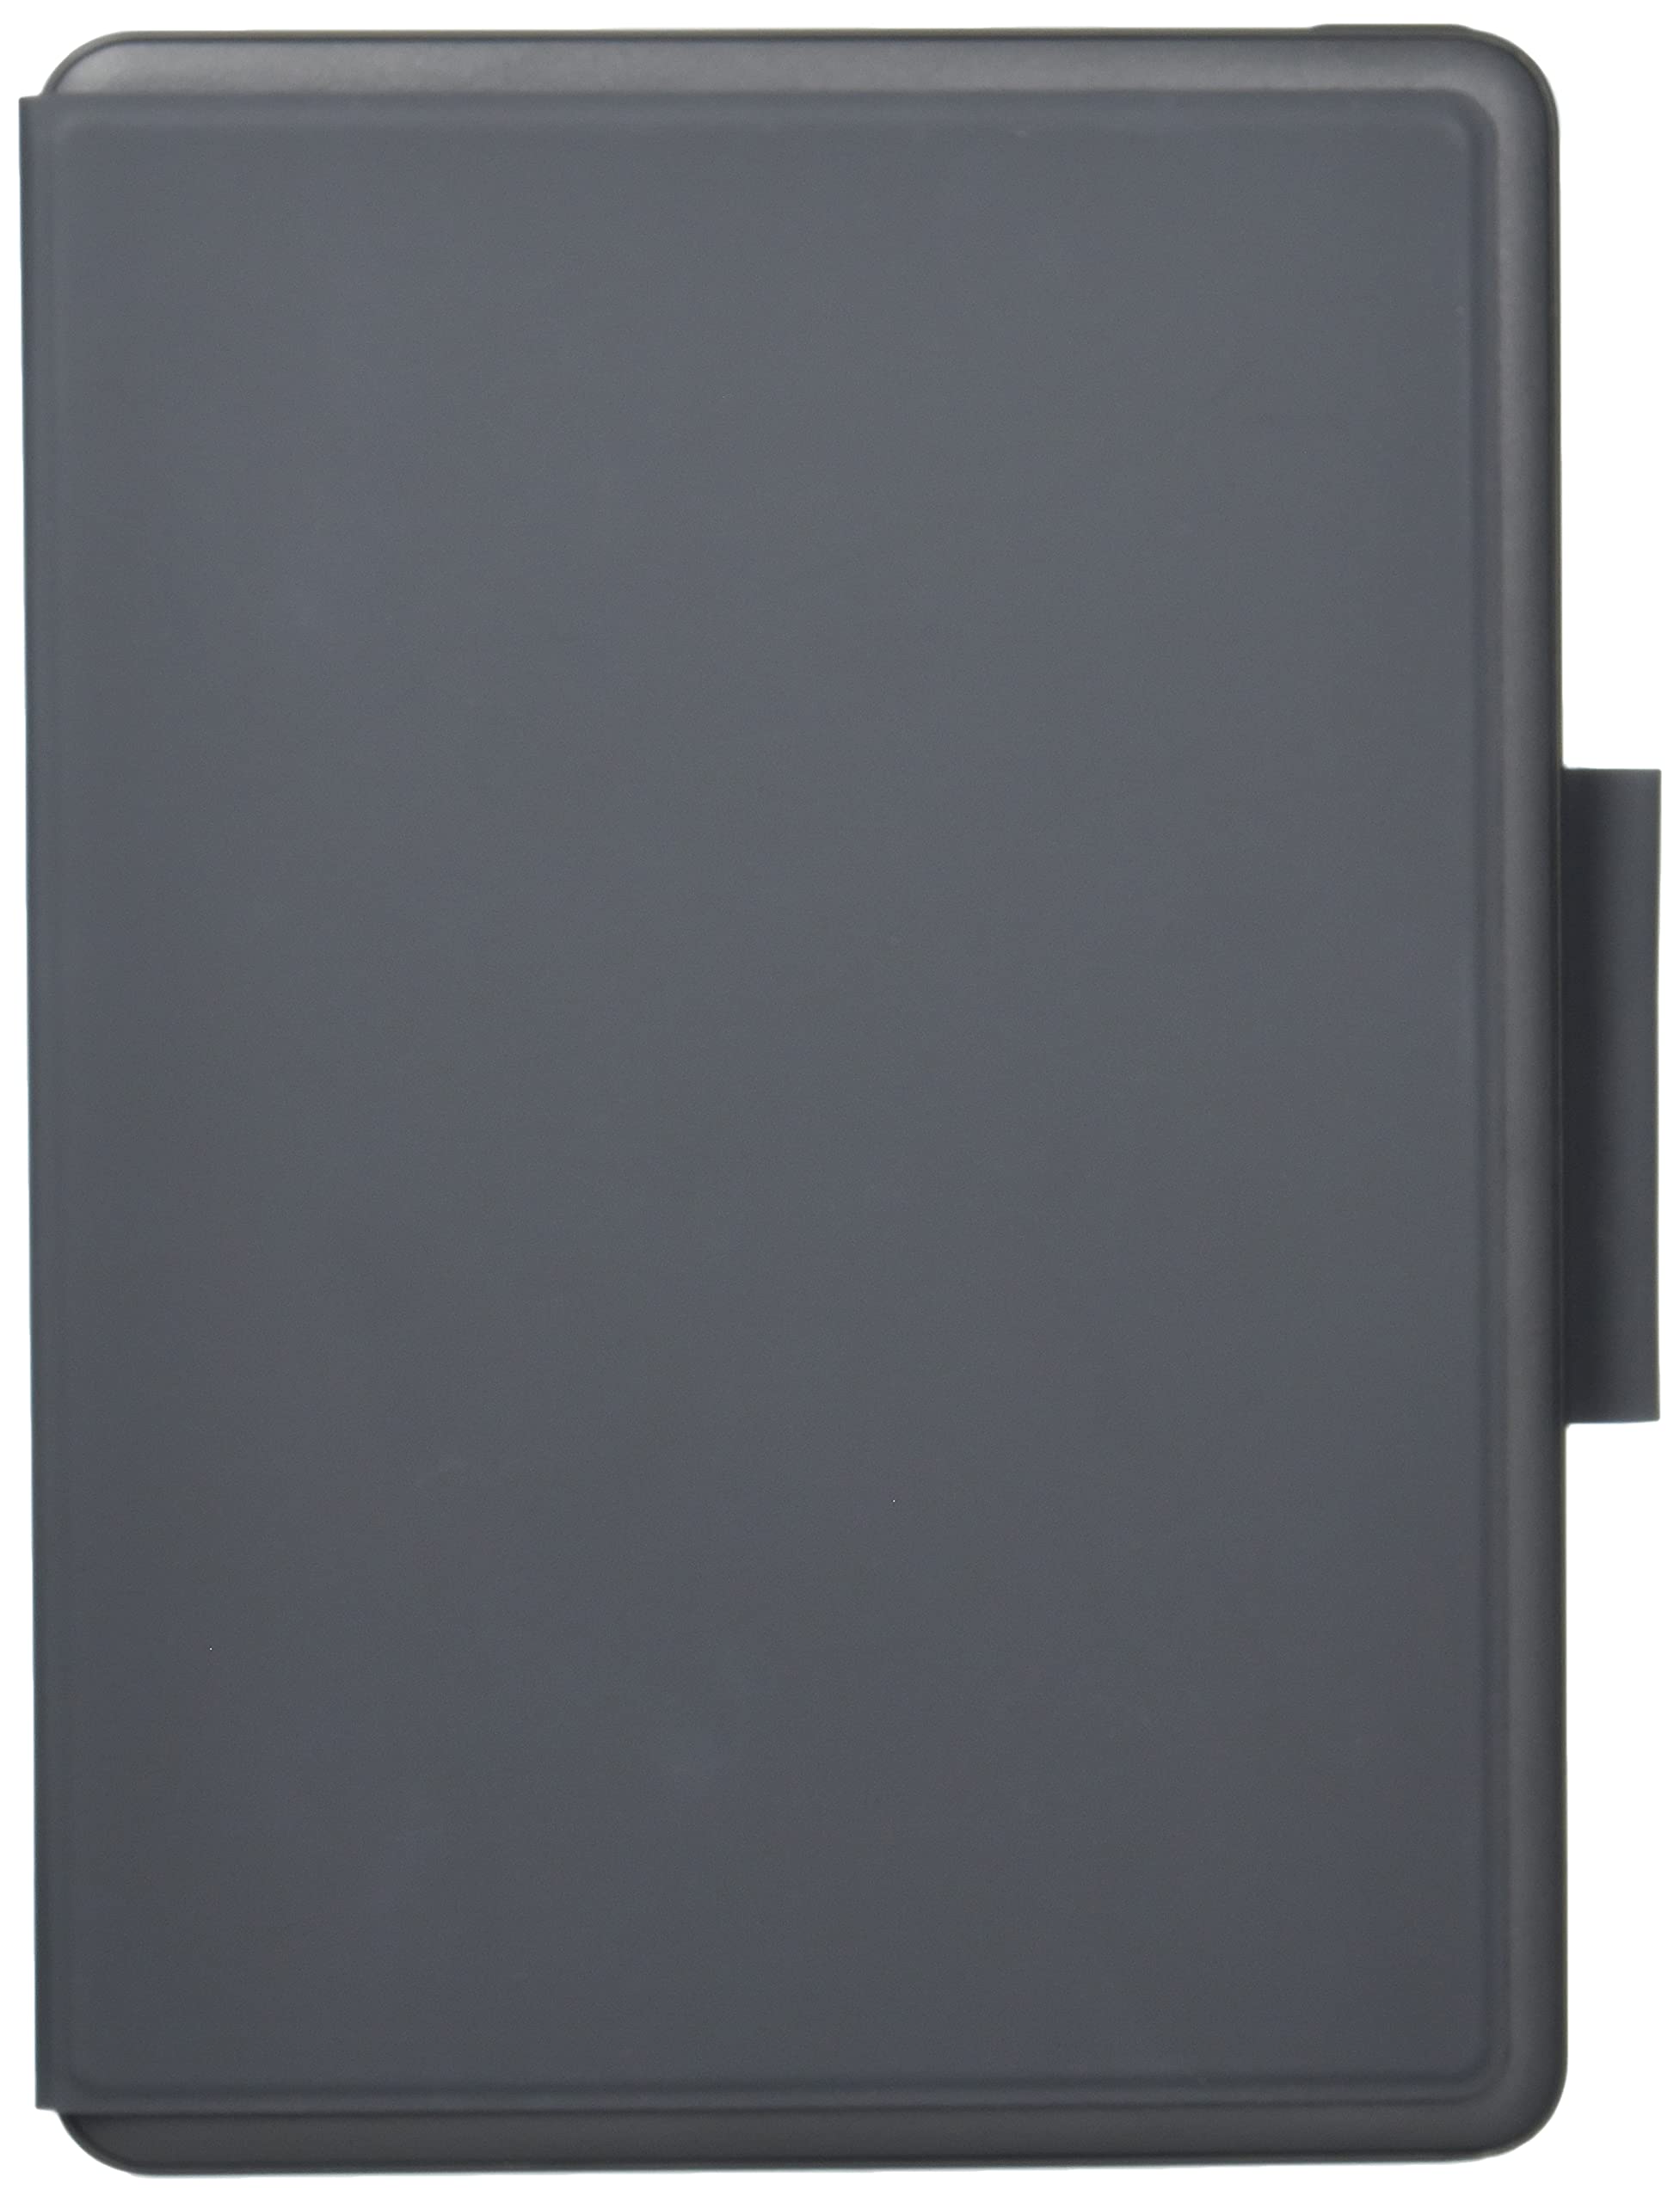 Logitech Slim Folio for The New Seventh-Generation iPad